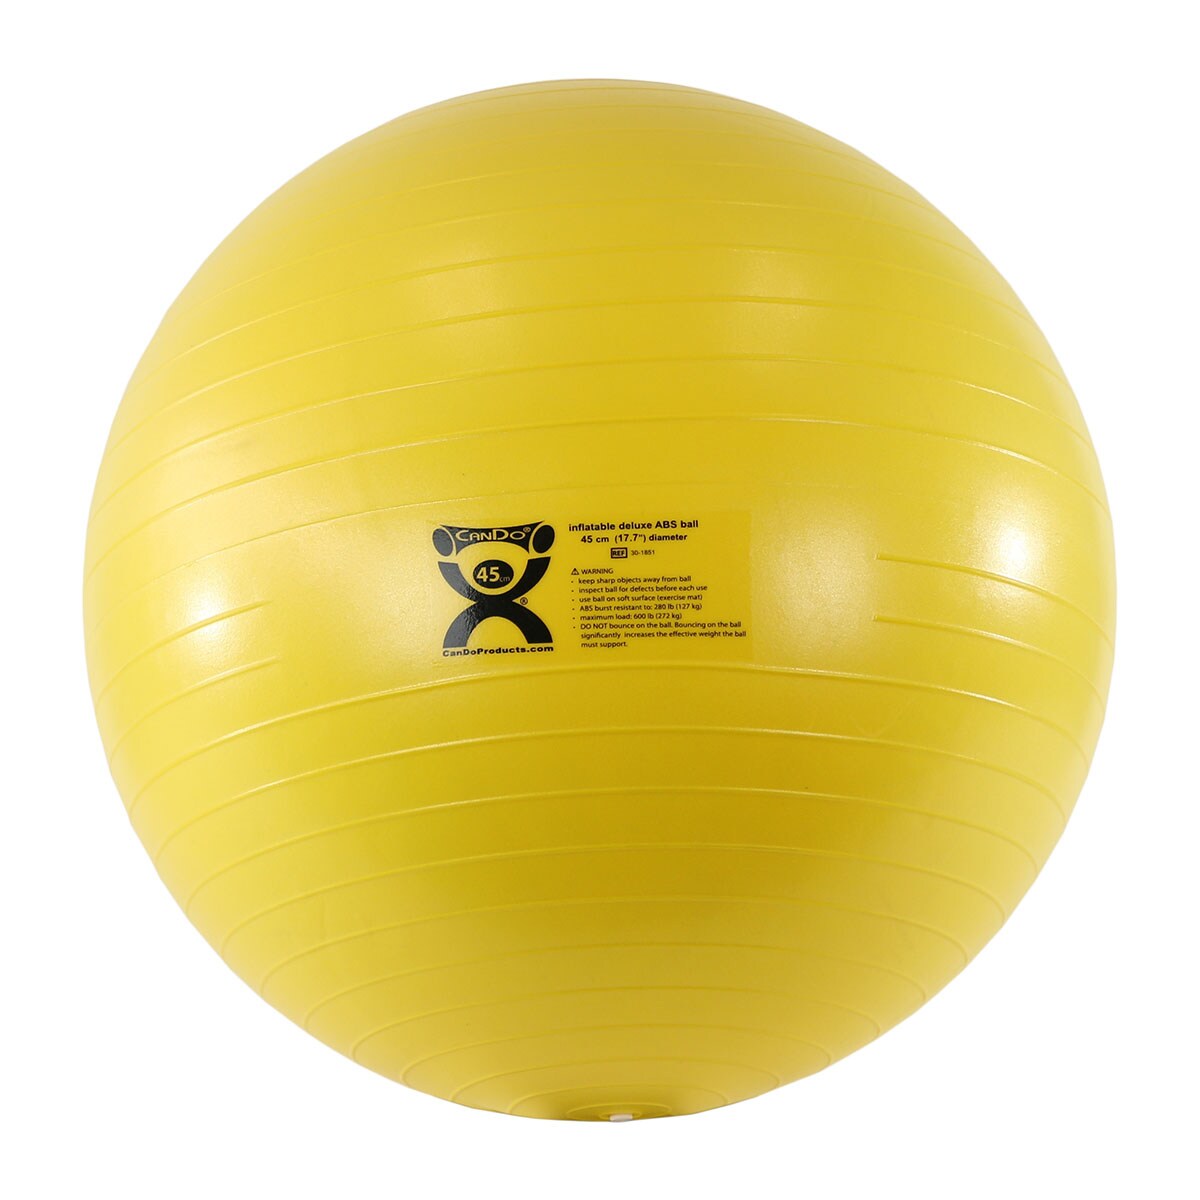 0414-0417 Soft Ball - Inflatable Pilates ball diam. 26cm - Sidea